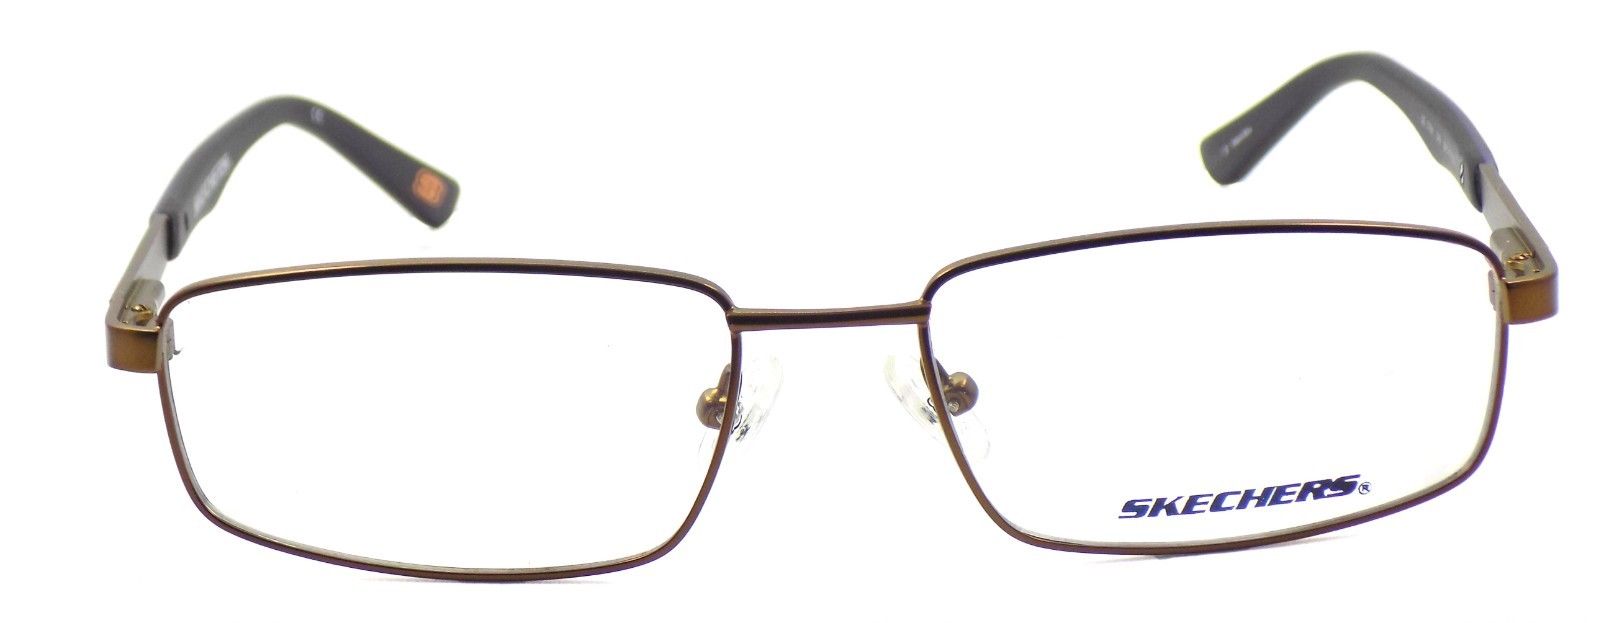 2-SKECHERS SE 3164 049 Men's Eyeglasses Frames 54-17-135 Matte Dark Brown + CASE-664689695324-IKSpecs